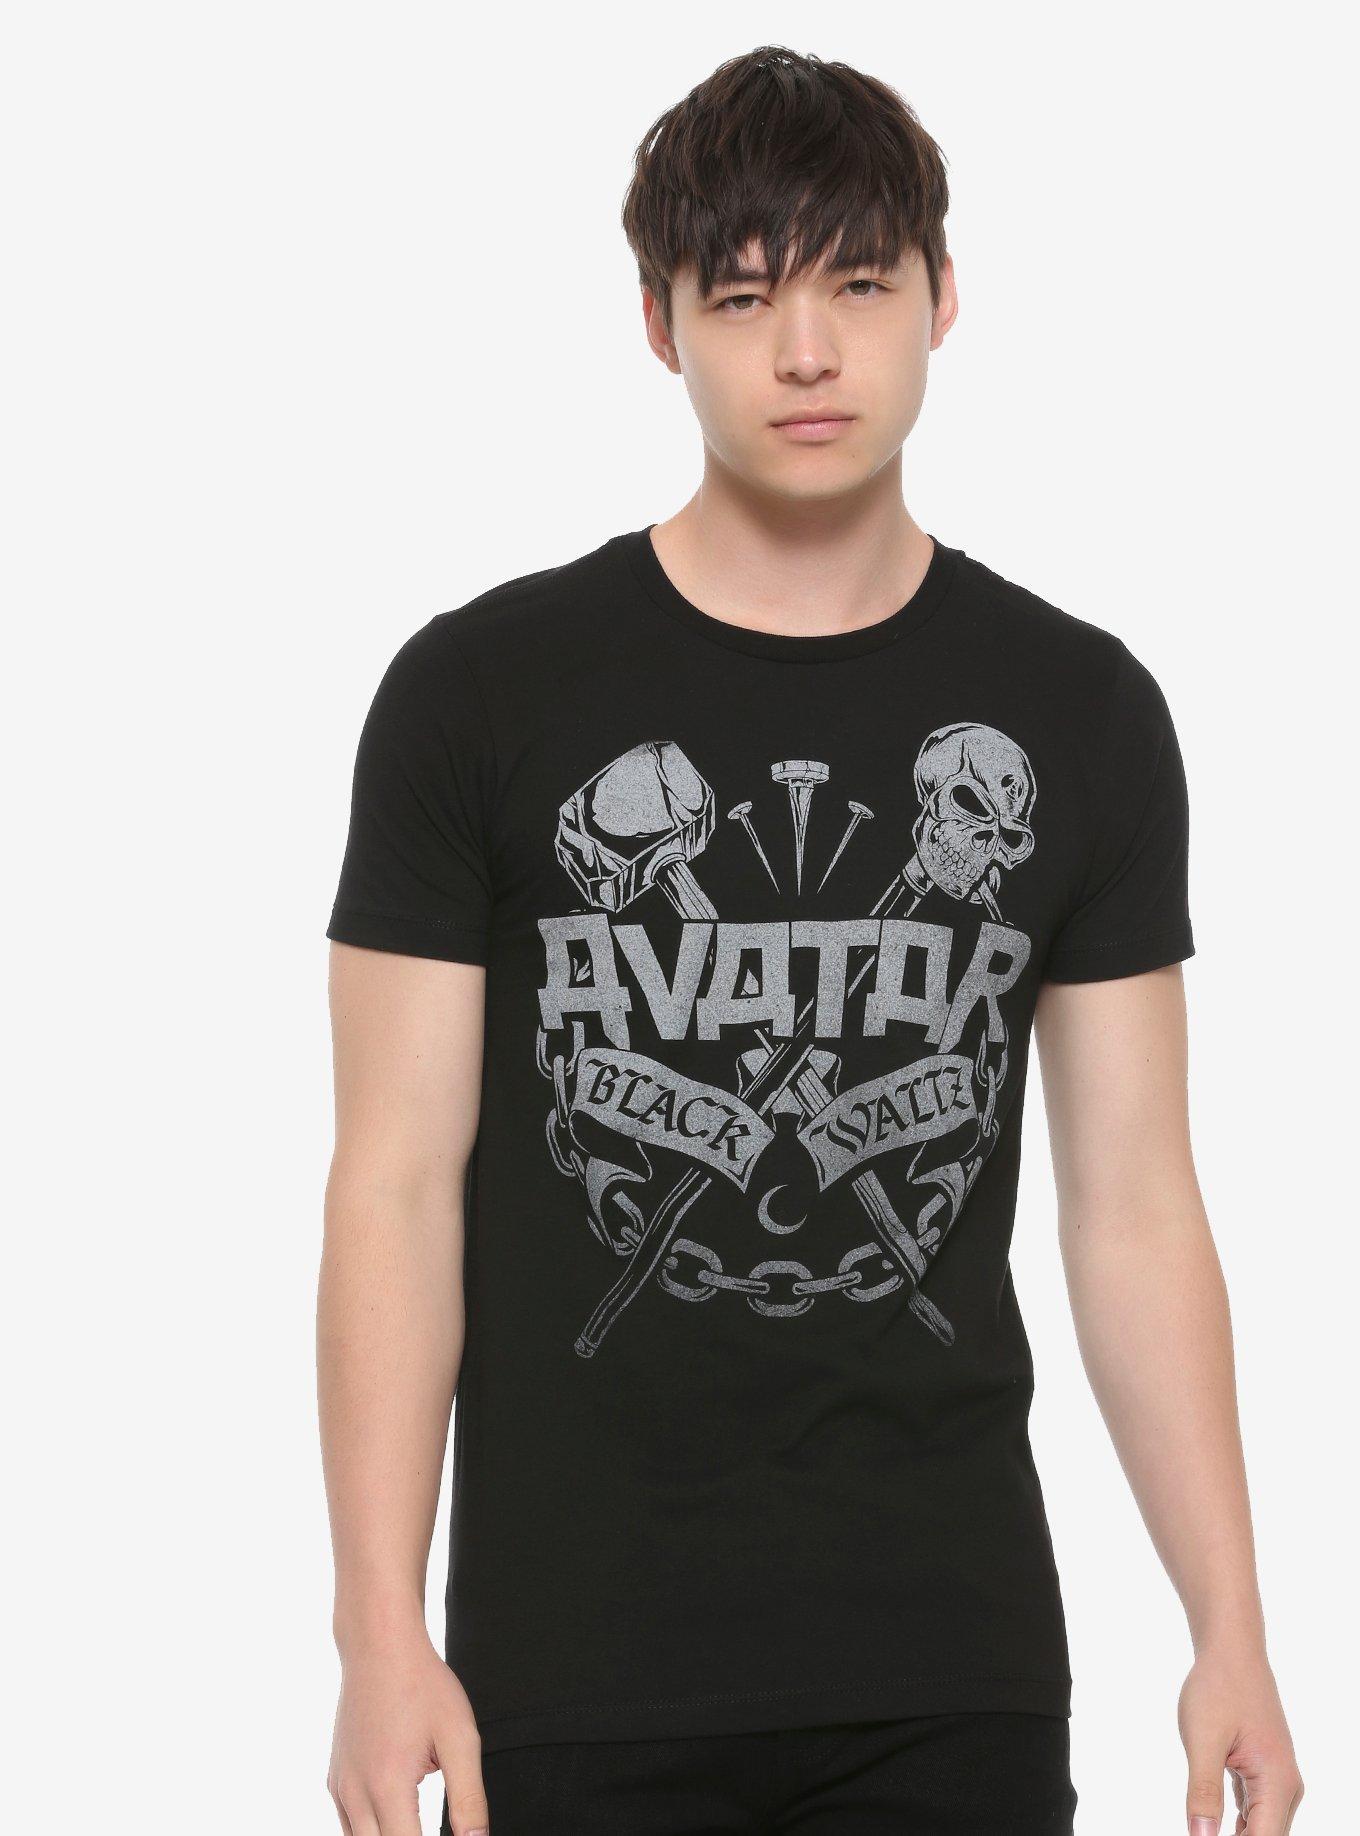 Avatar Black Waltz T-Shirt, BLACK, alternate